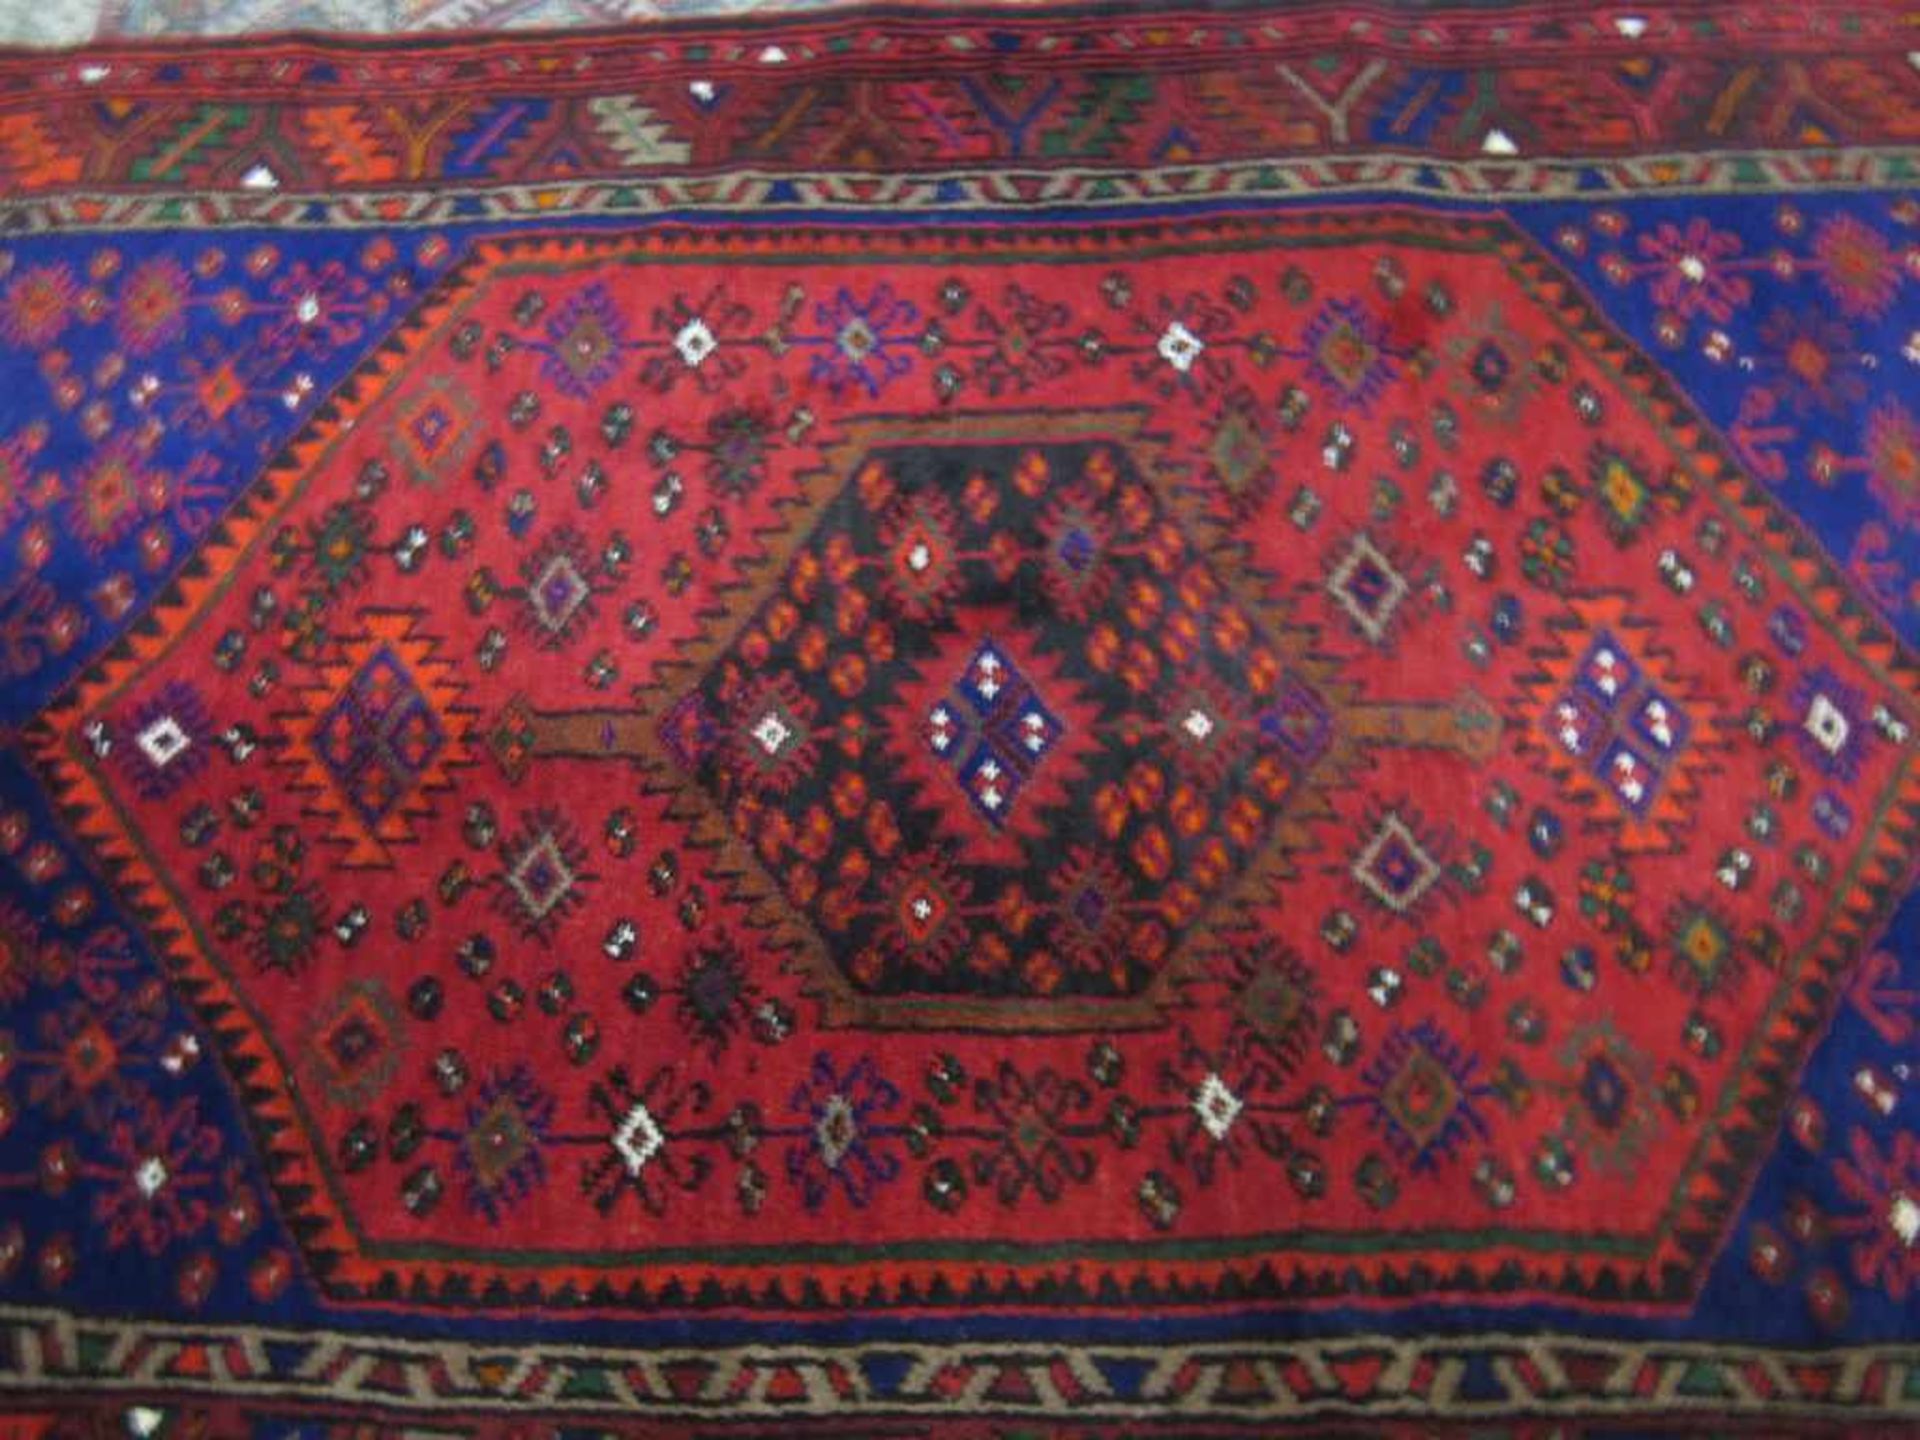 Teppich handgeknüpft rotgrundig 223x135cm - Image 2 of 3